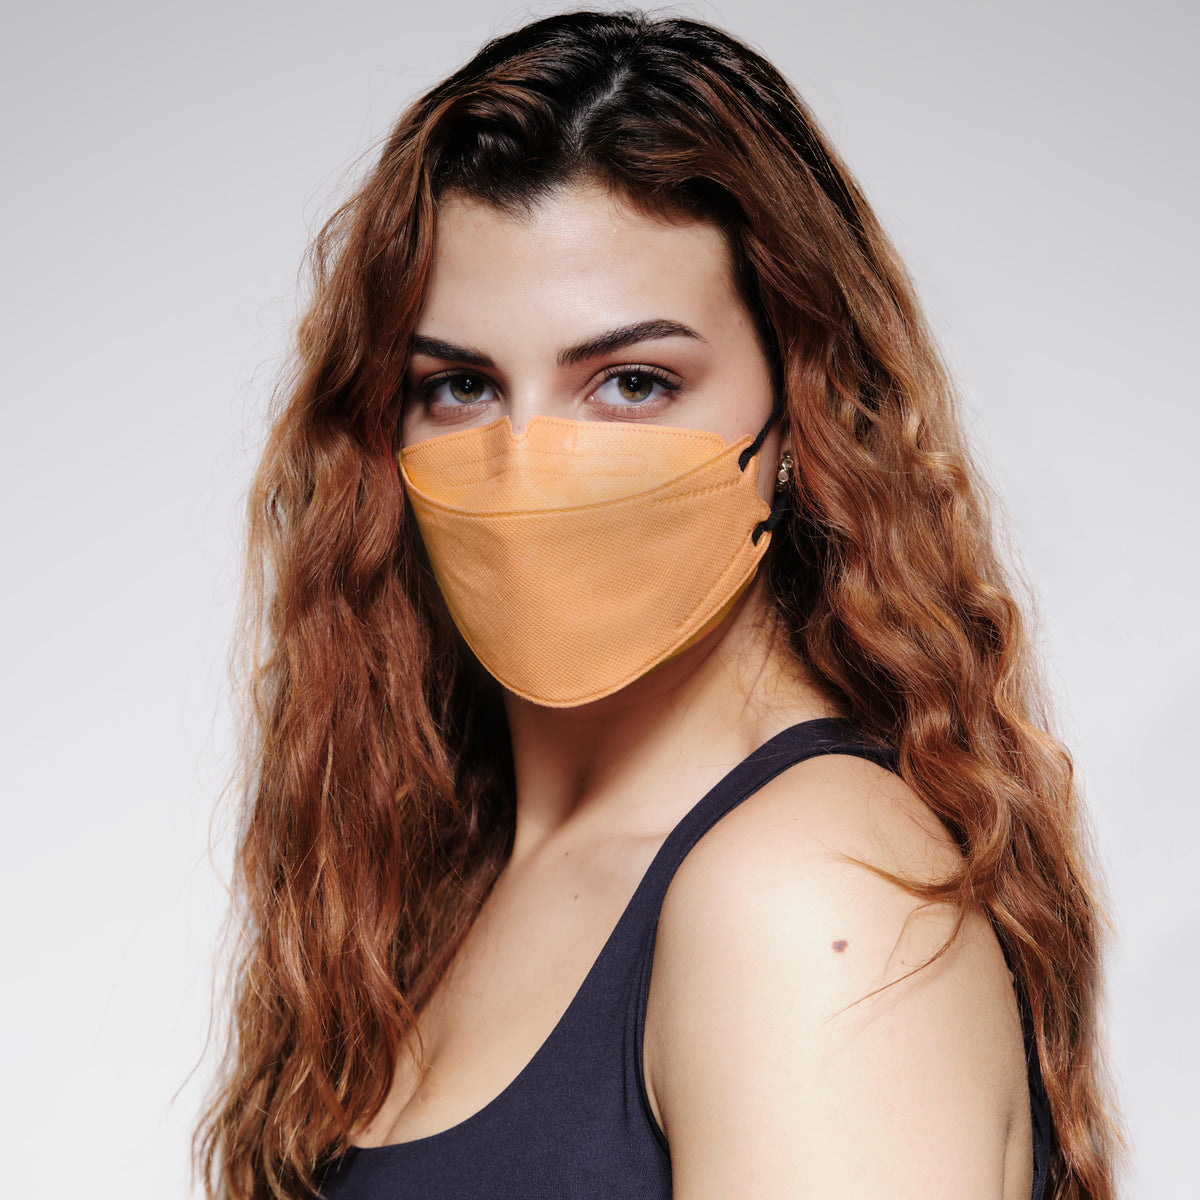 KN95 Respirator Face Mask: Neutral Bundle